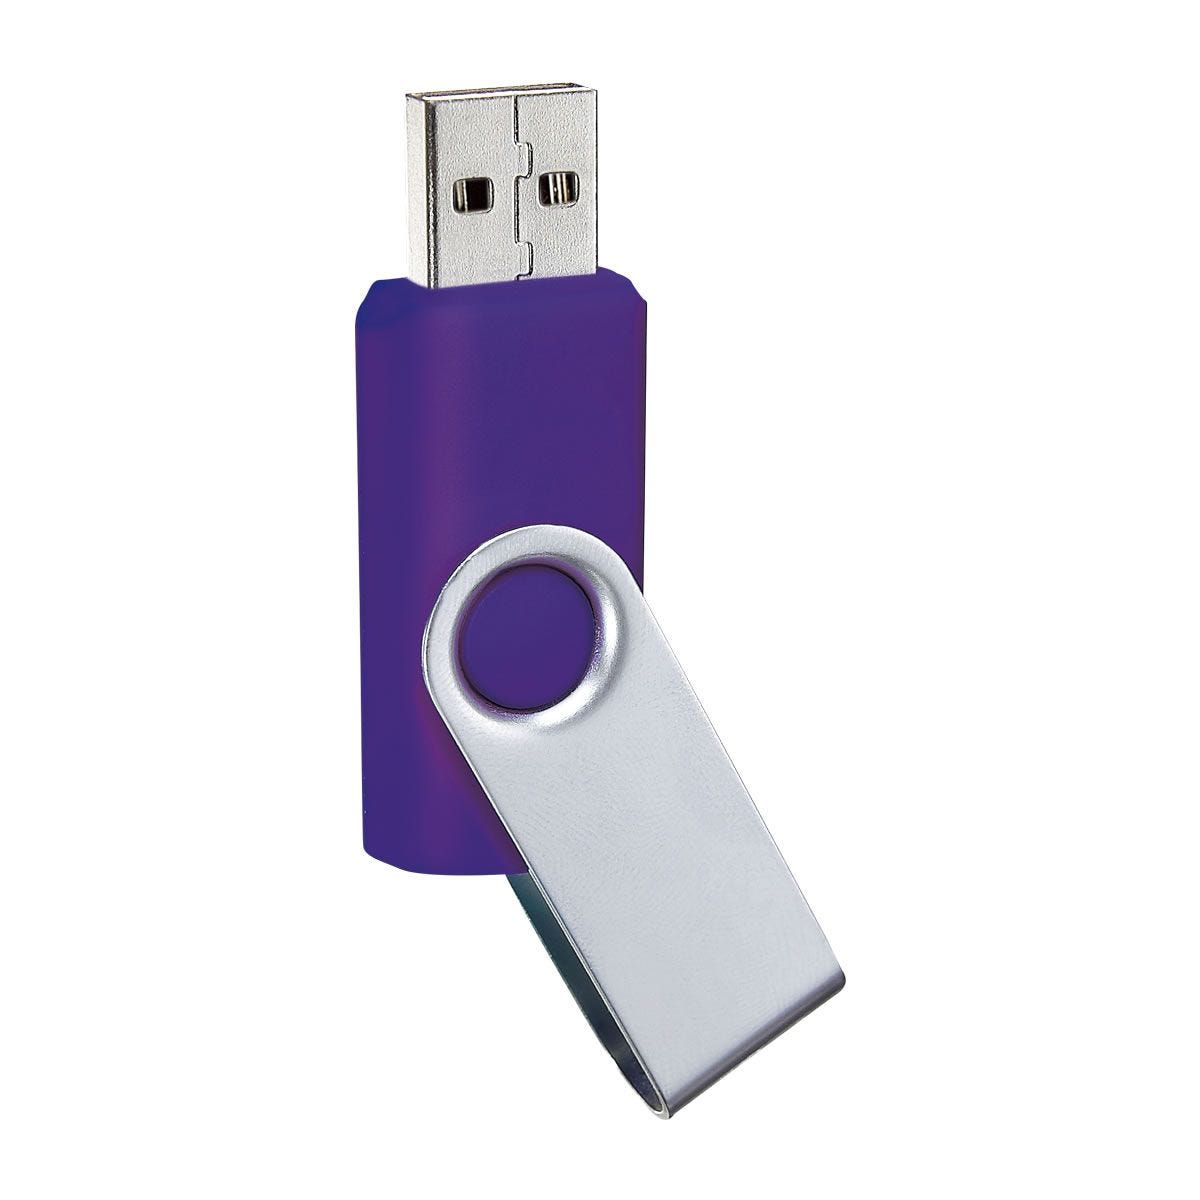 USB SELWIN 16 GB MORADO